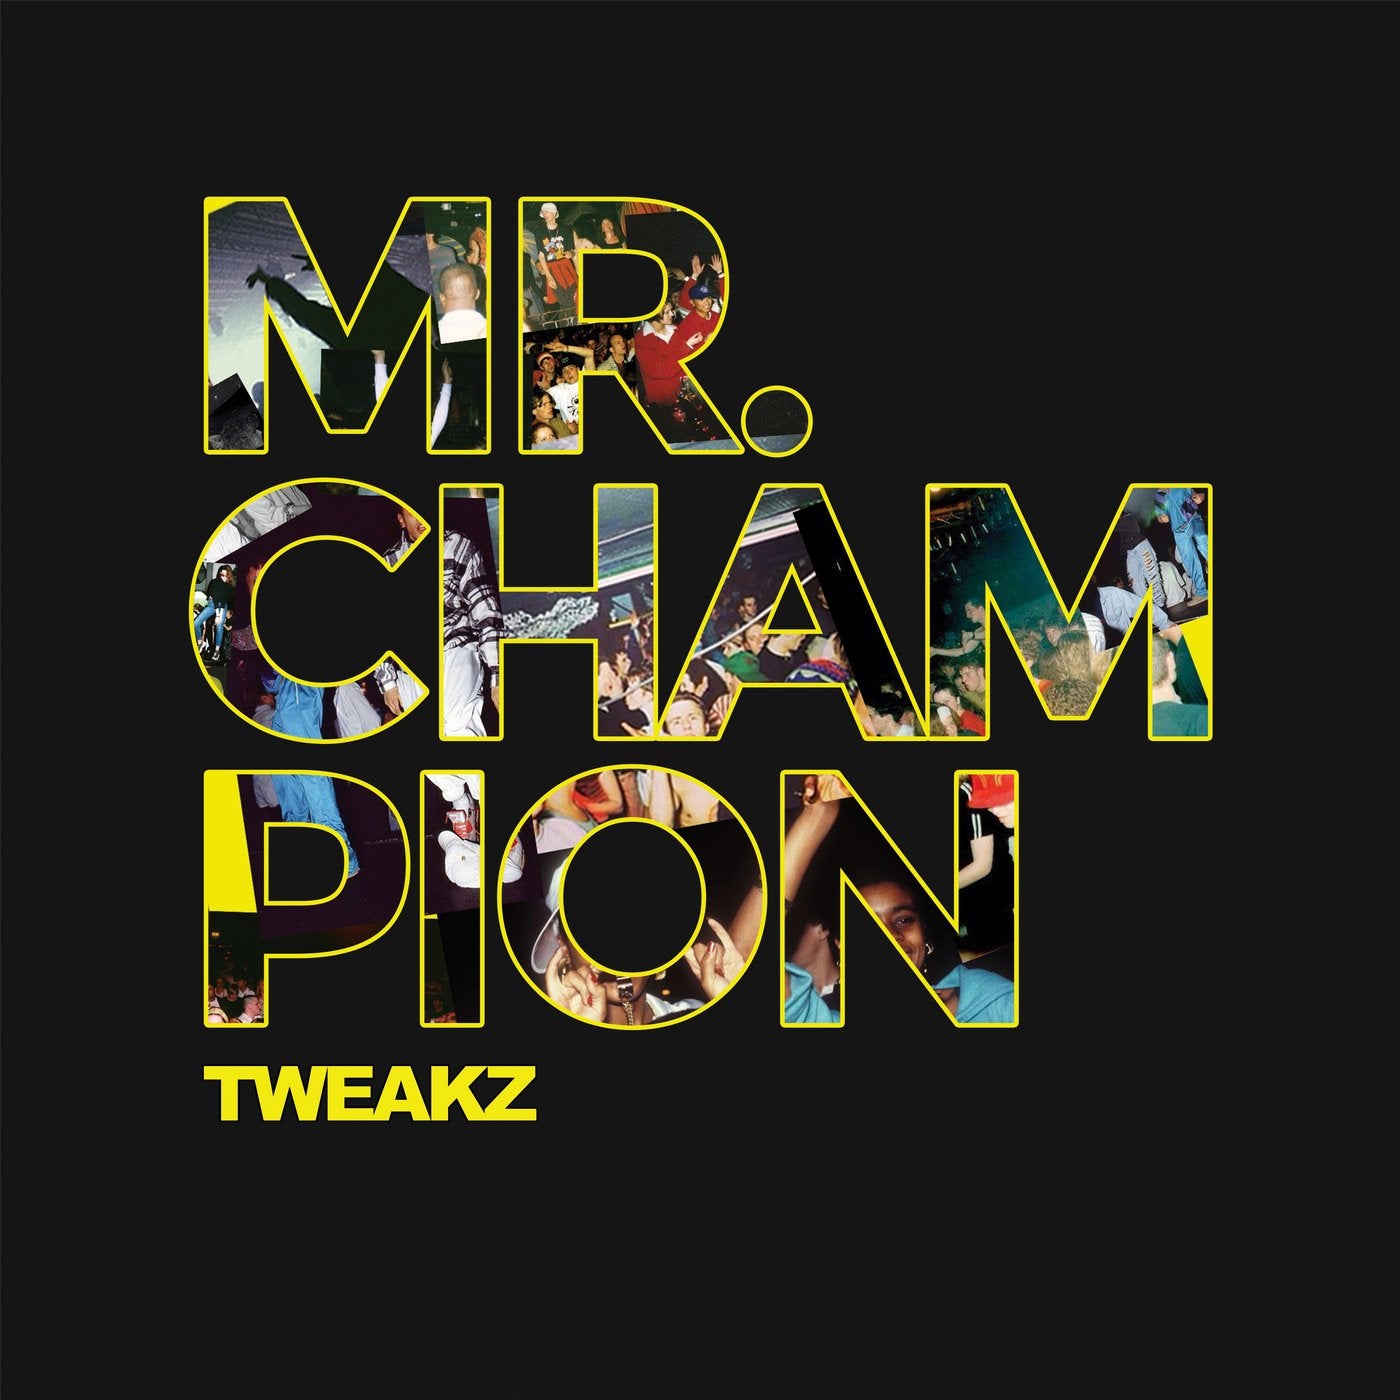 Mr. Champion